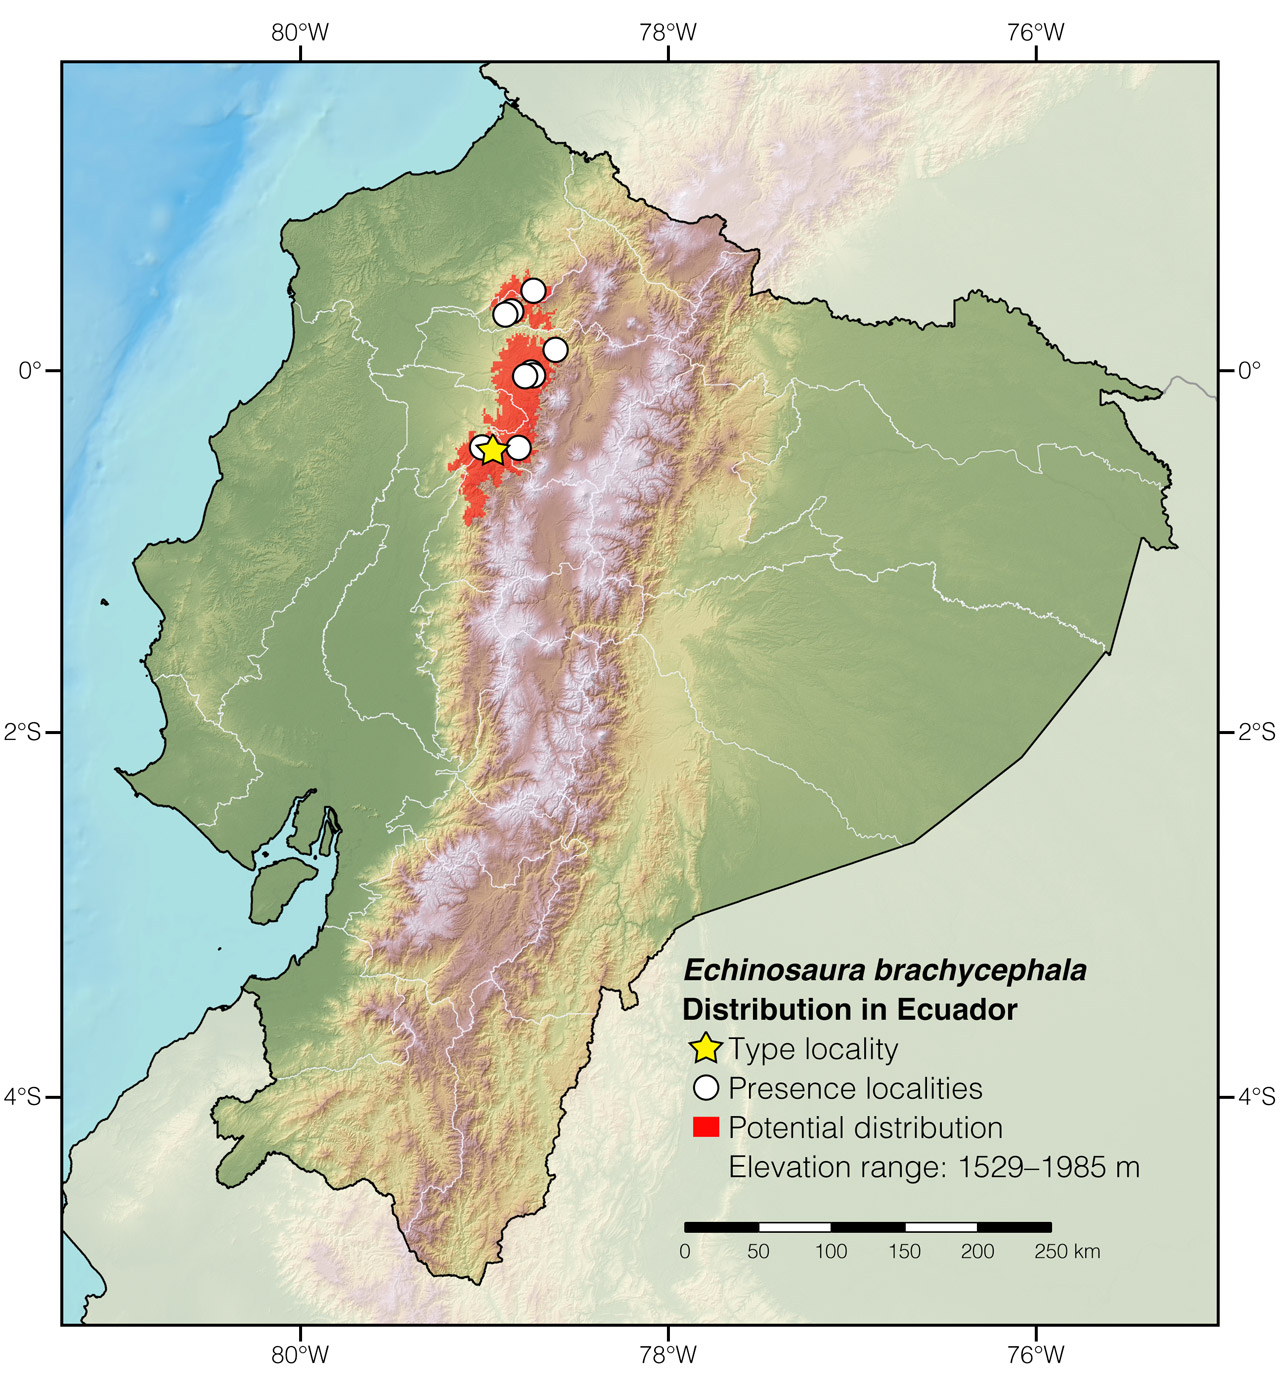 Distribution of Echinosaura brachycephala in Ecuador